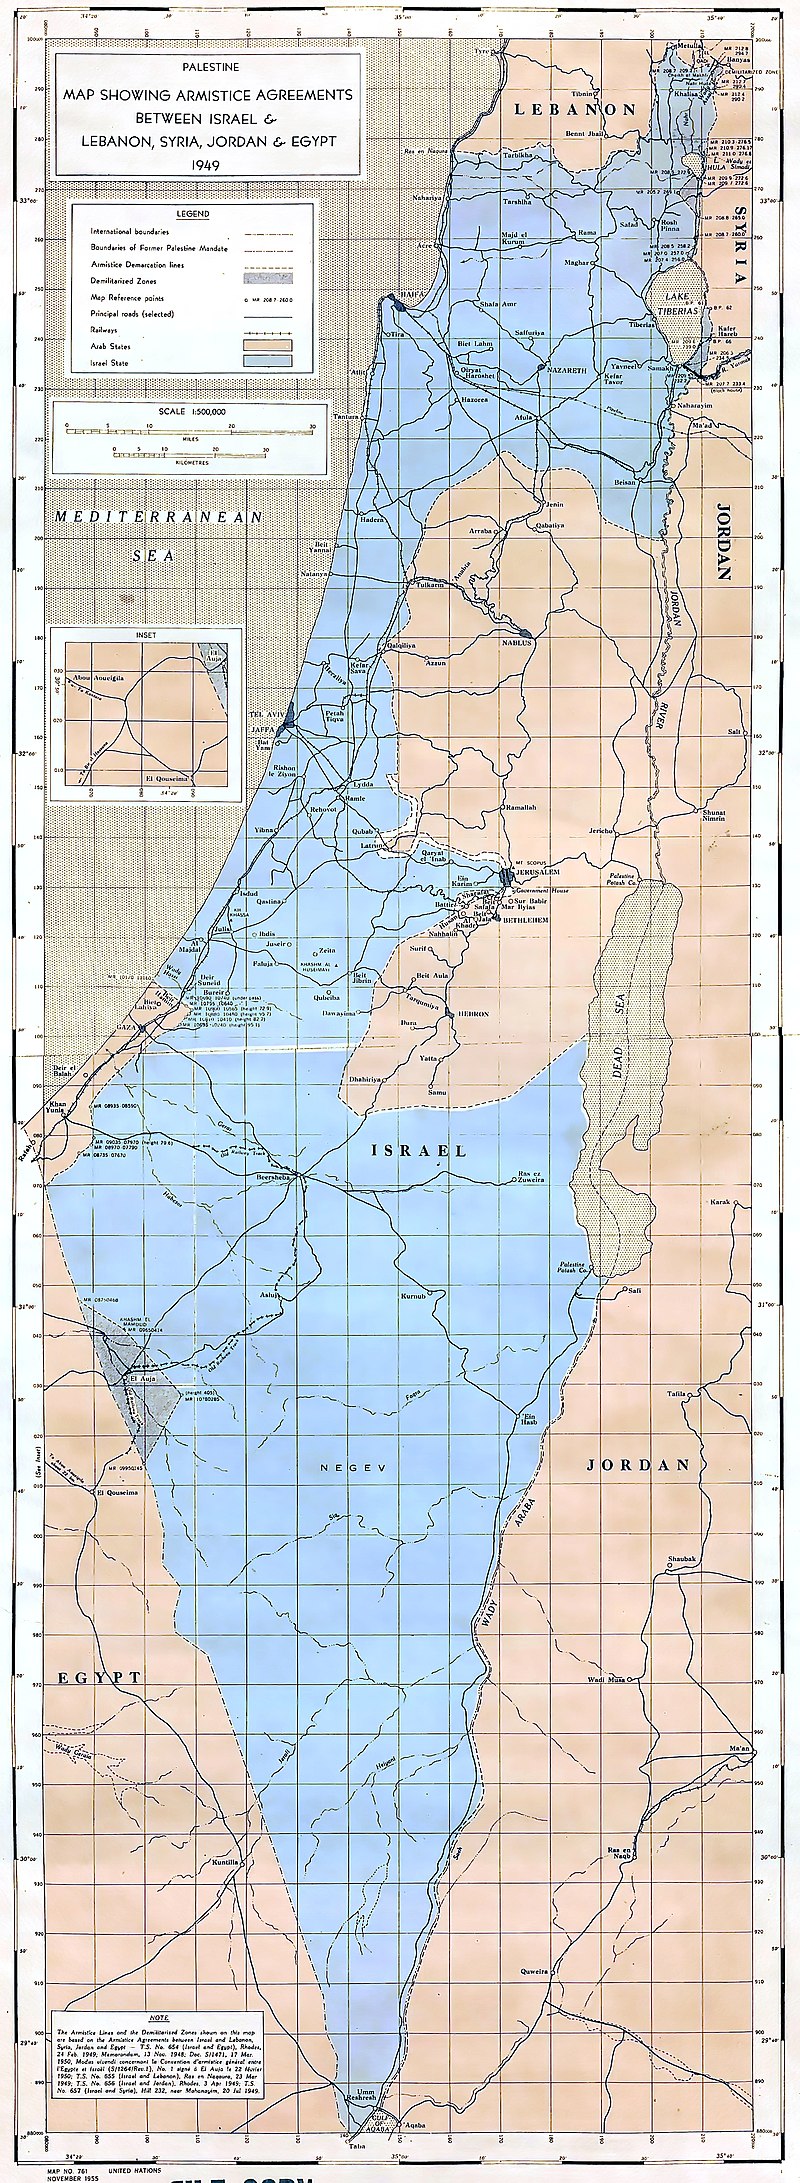 800px-United_Nations_Palestine_map_showing_Armistice_Agreements_between_Israel_%26_Lebanon%2C_Syria%2C_Jordan_%26_Egypt_1949-1950.jpg